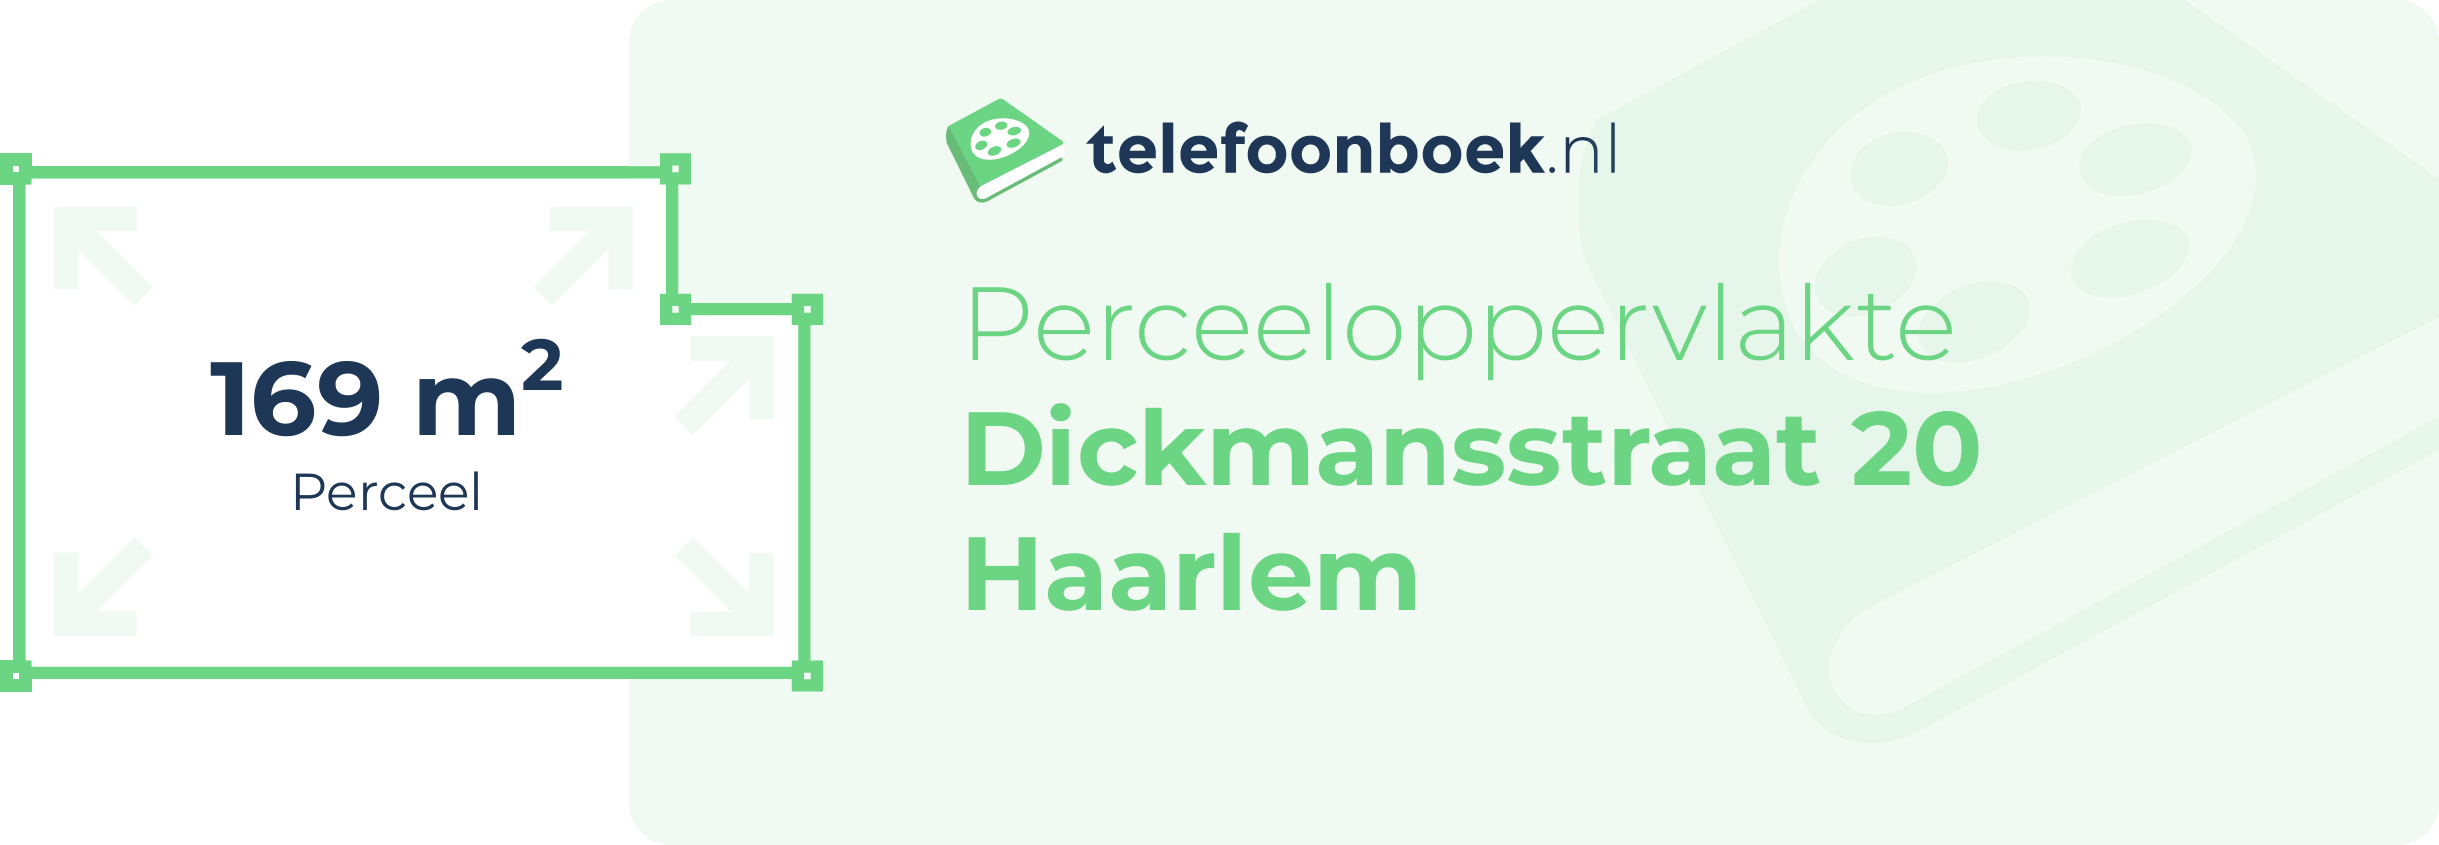 Perceeloppervlakte Dickmansstraat 20 Haarlem